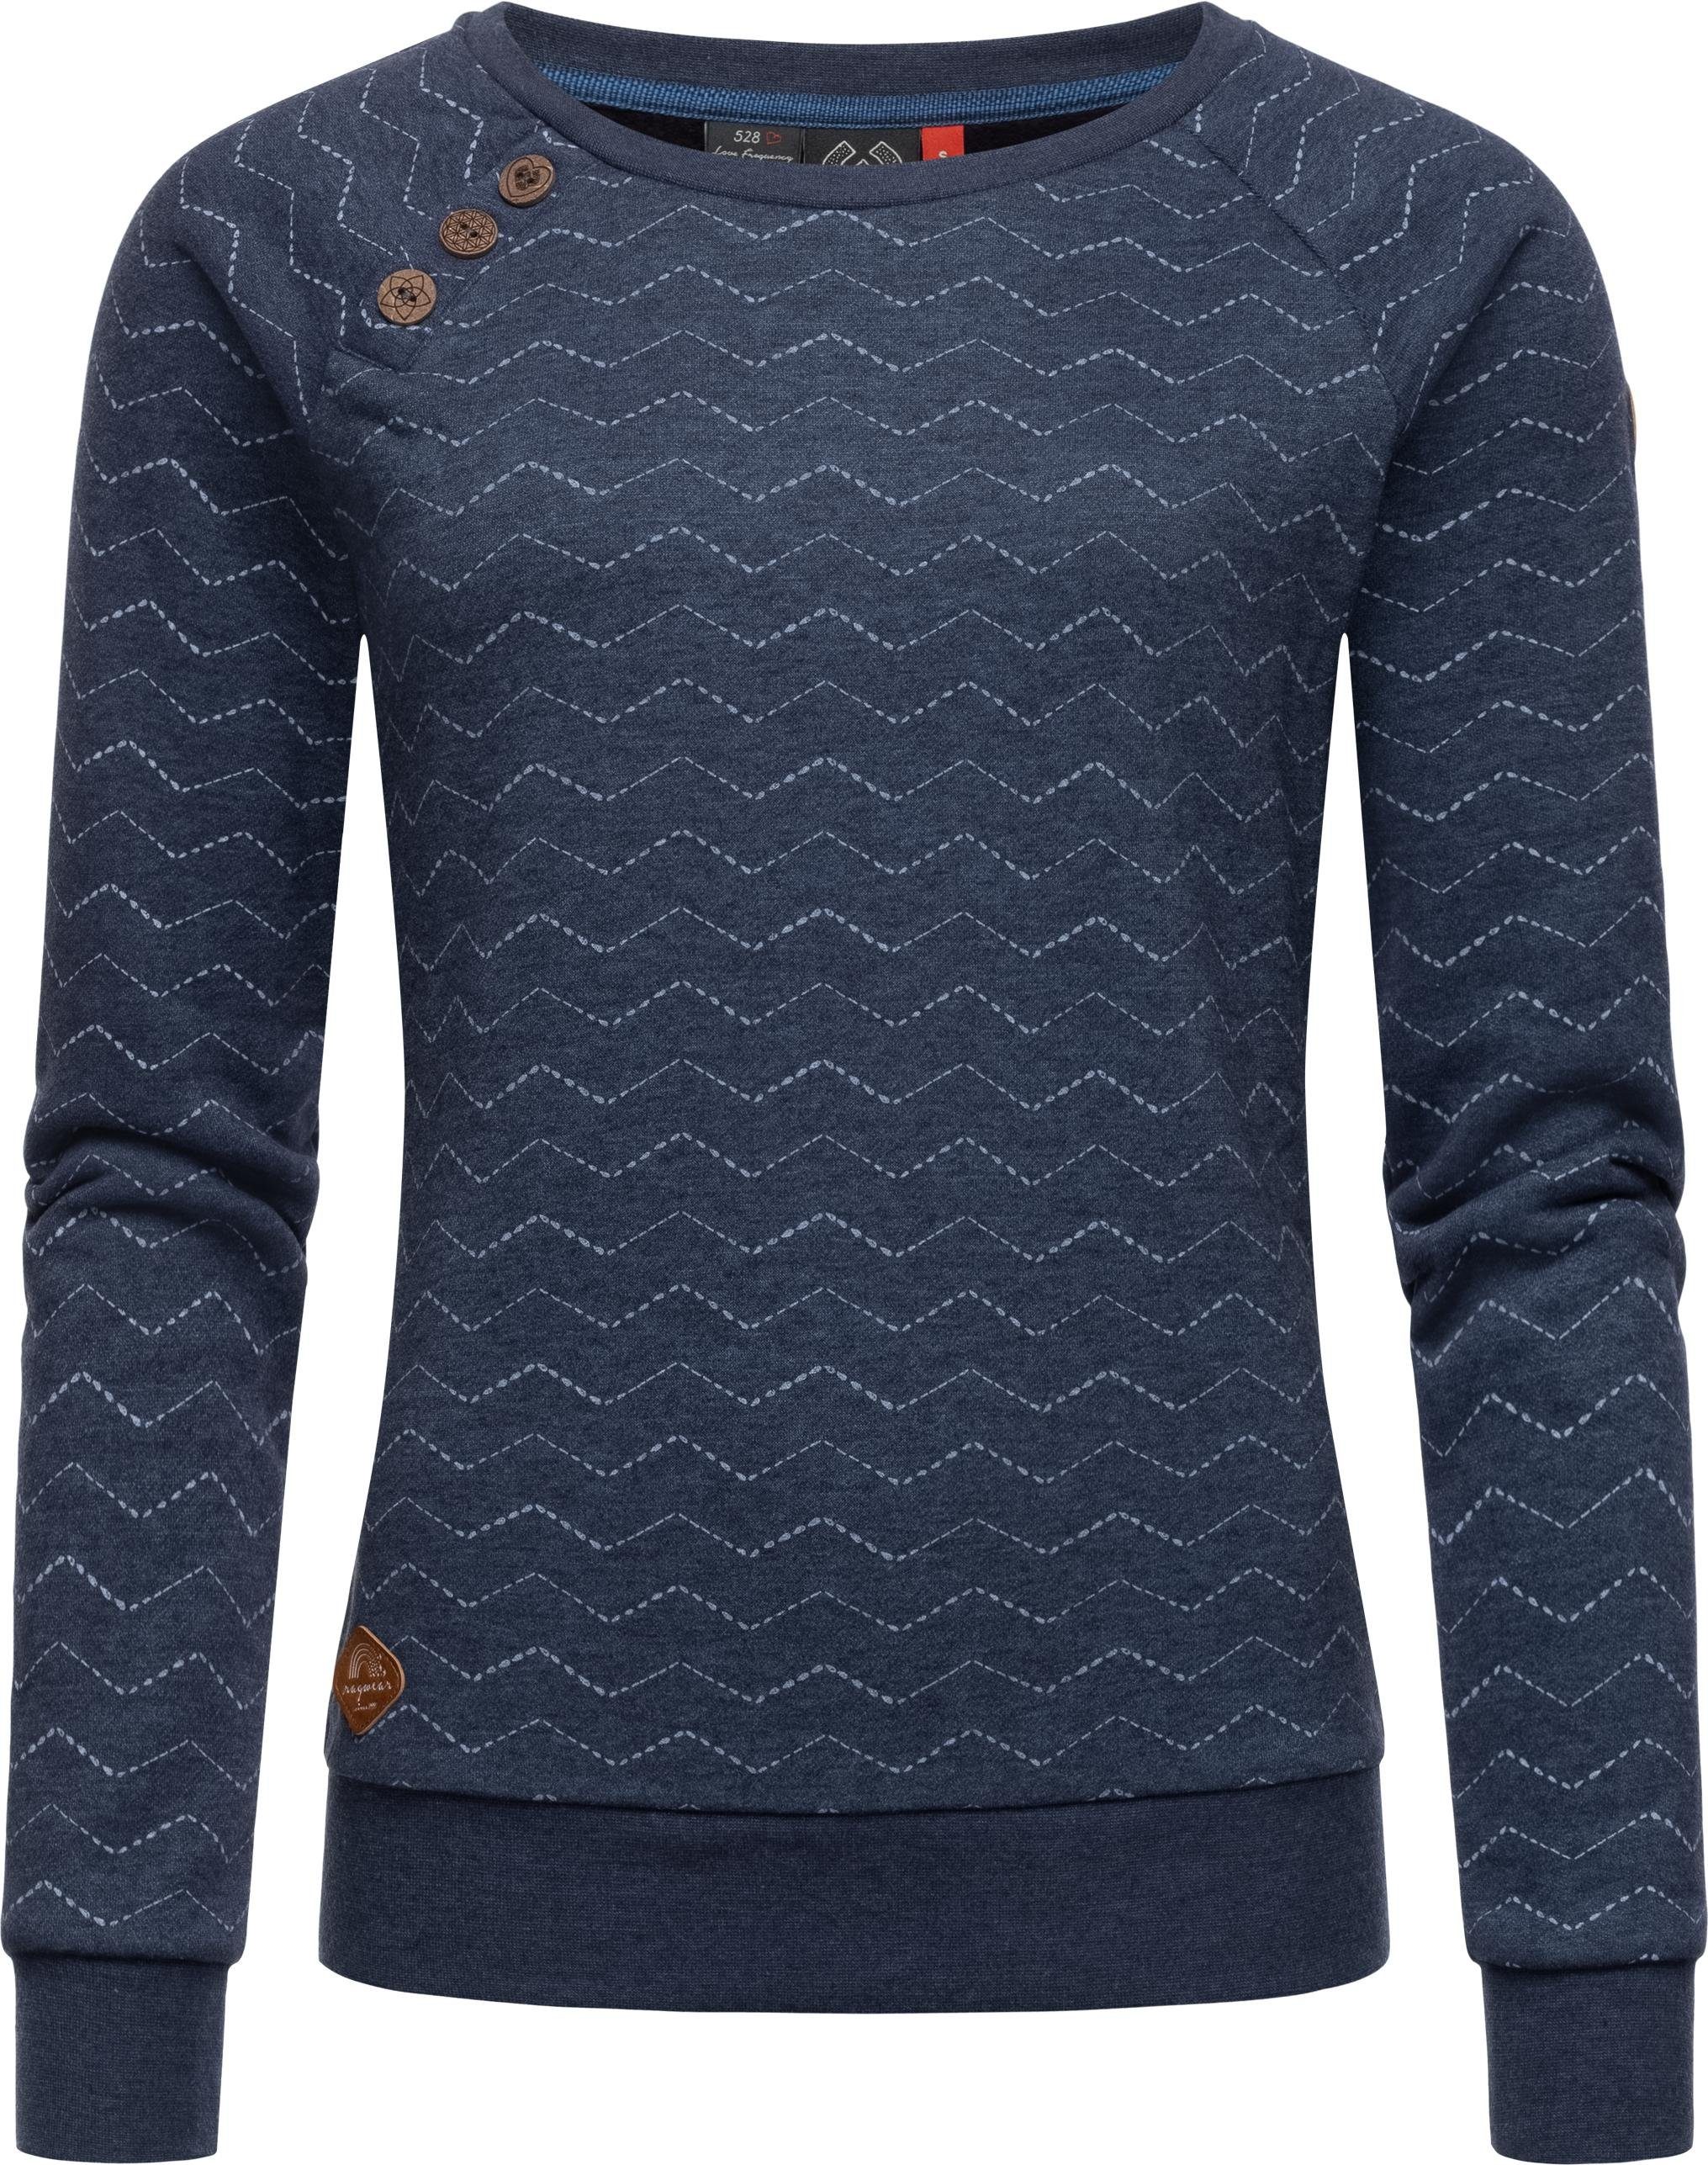 Ragwear Sweater Daria Zig Zag stylisches Damen Sweatshirt mit Zick-Zack-Muster navy